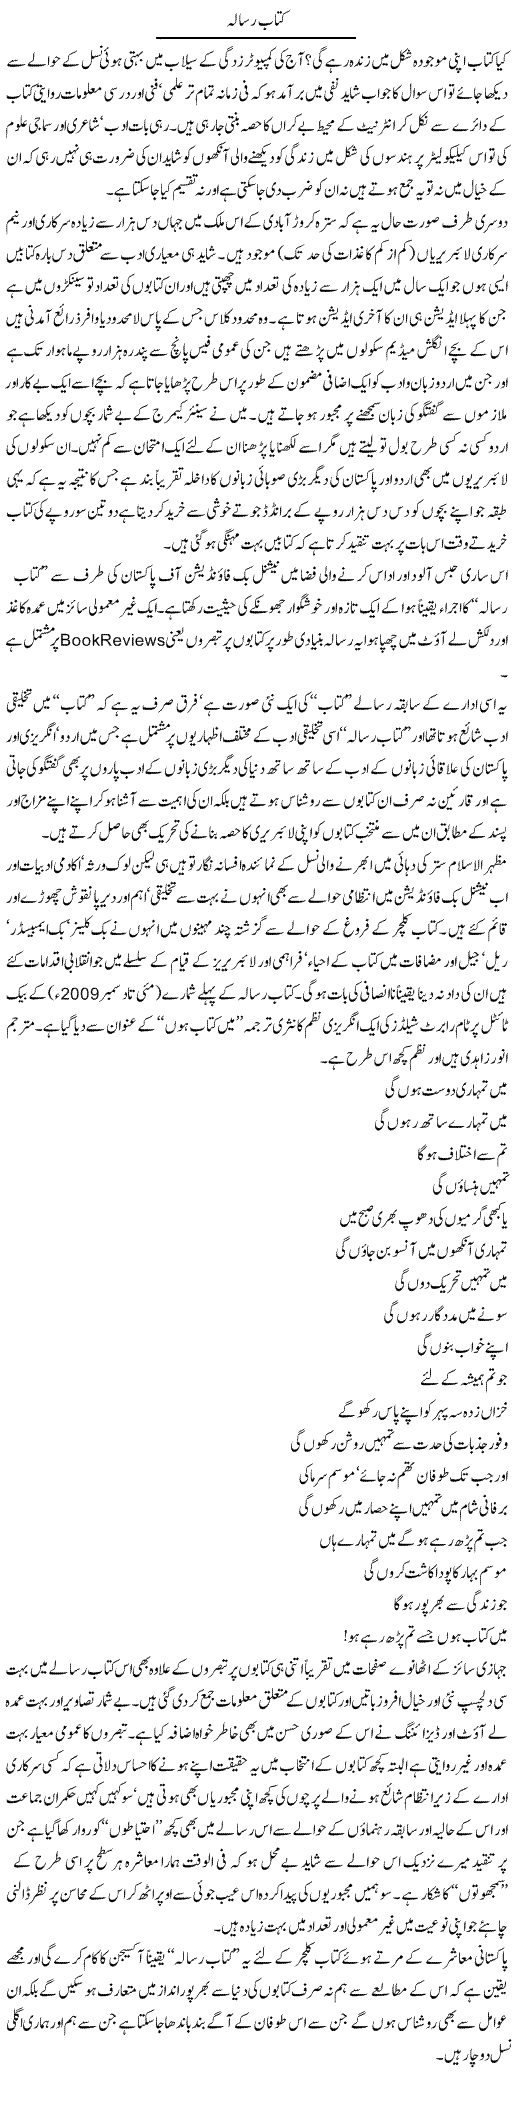 Kitab risala Express Column Amjad Islam 18 Feb 2010